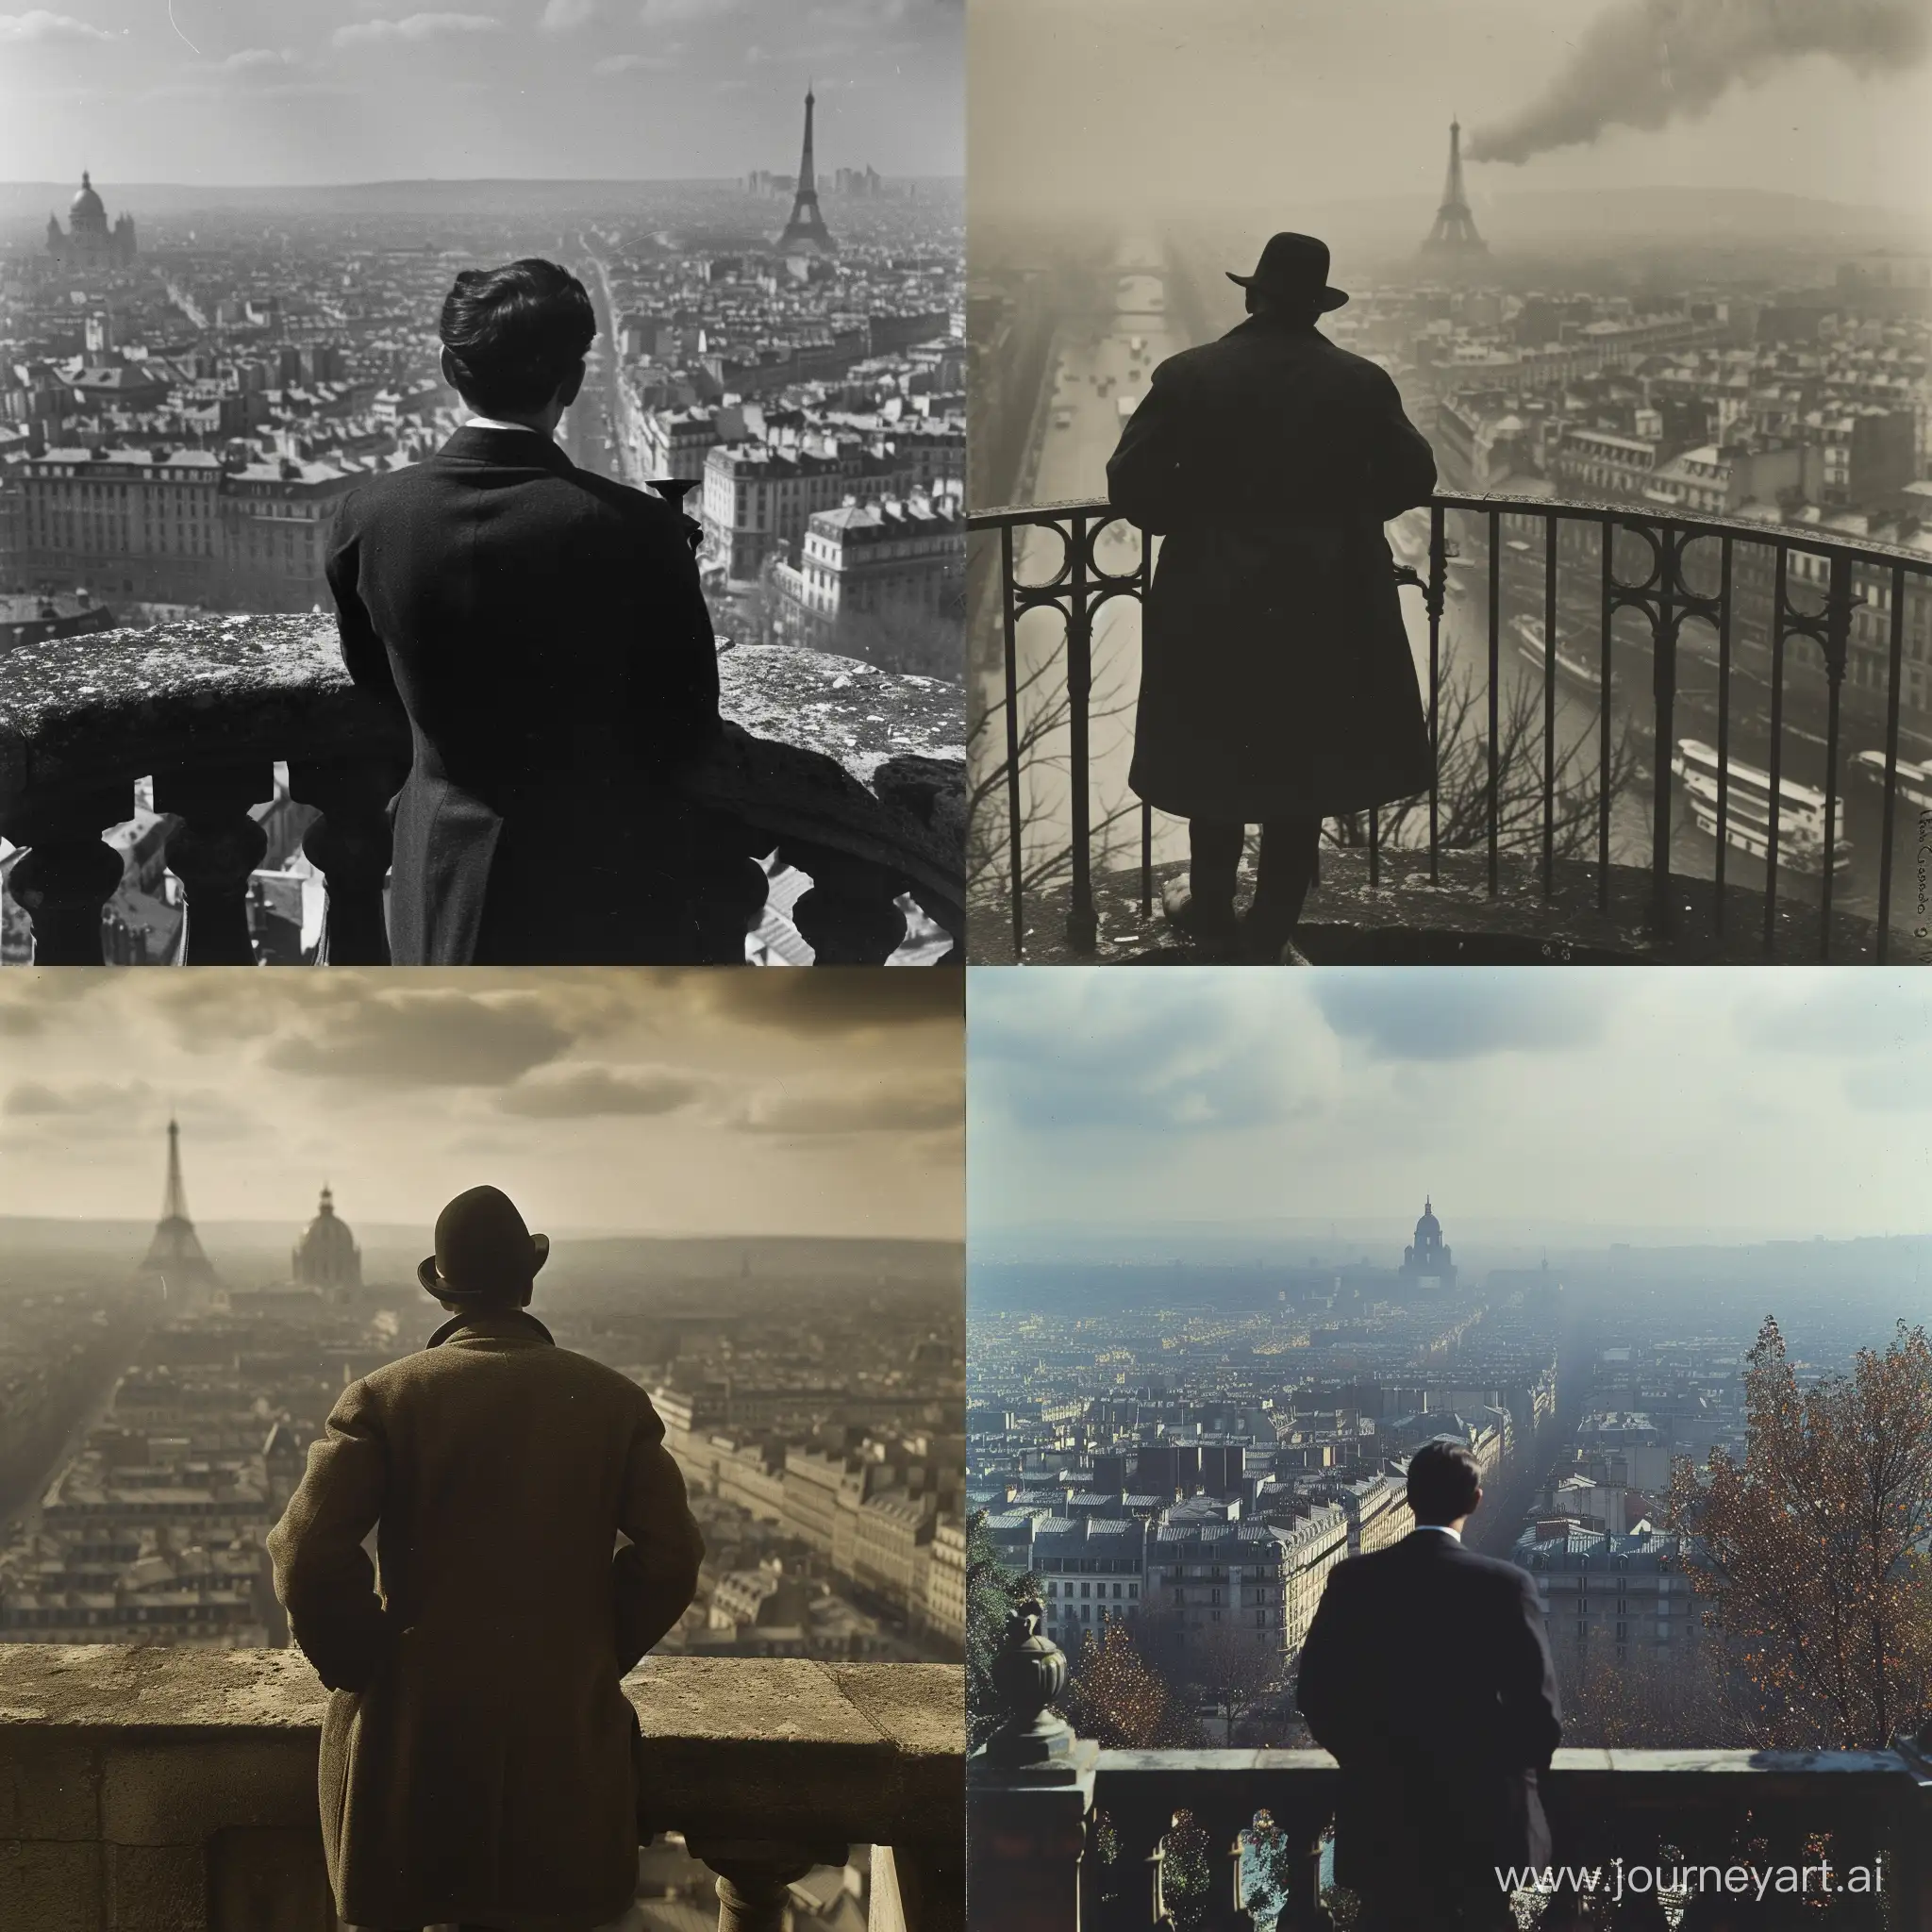 French-Citizen-Admiring-1930s-Cityscape